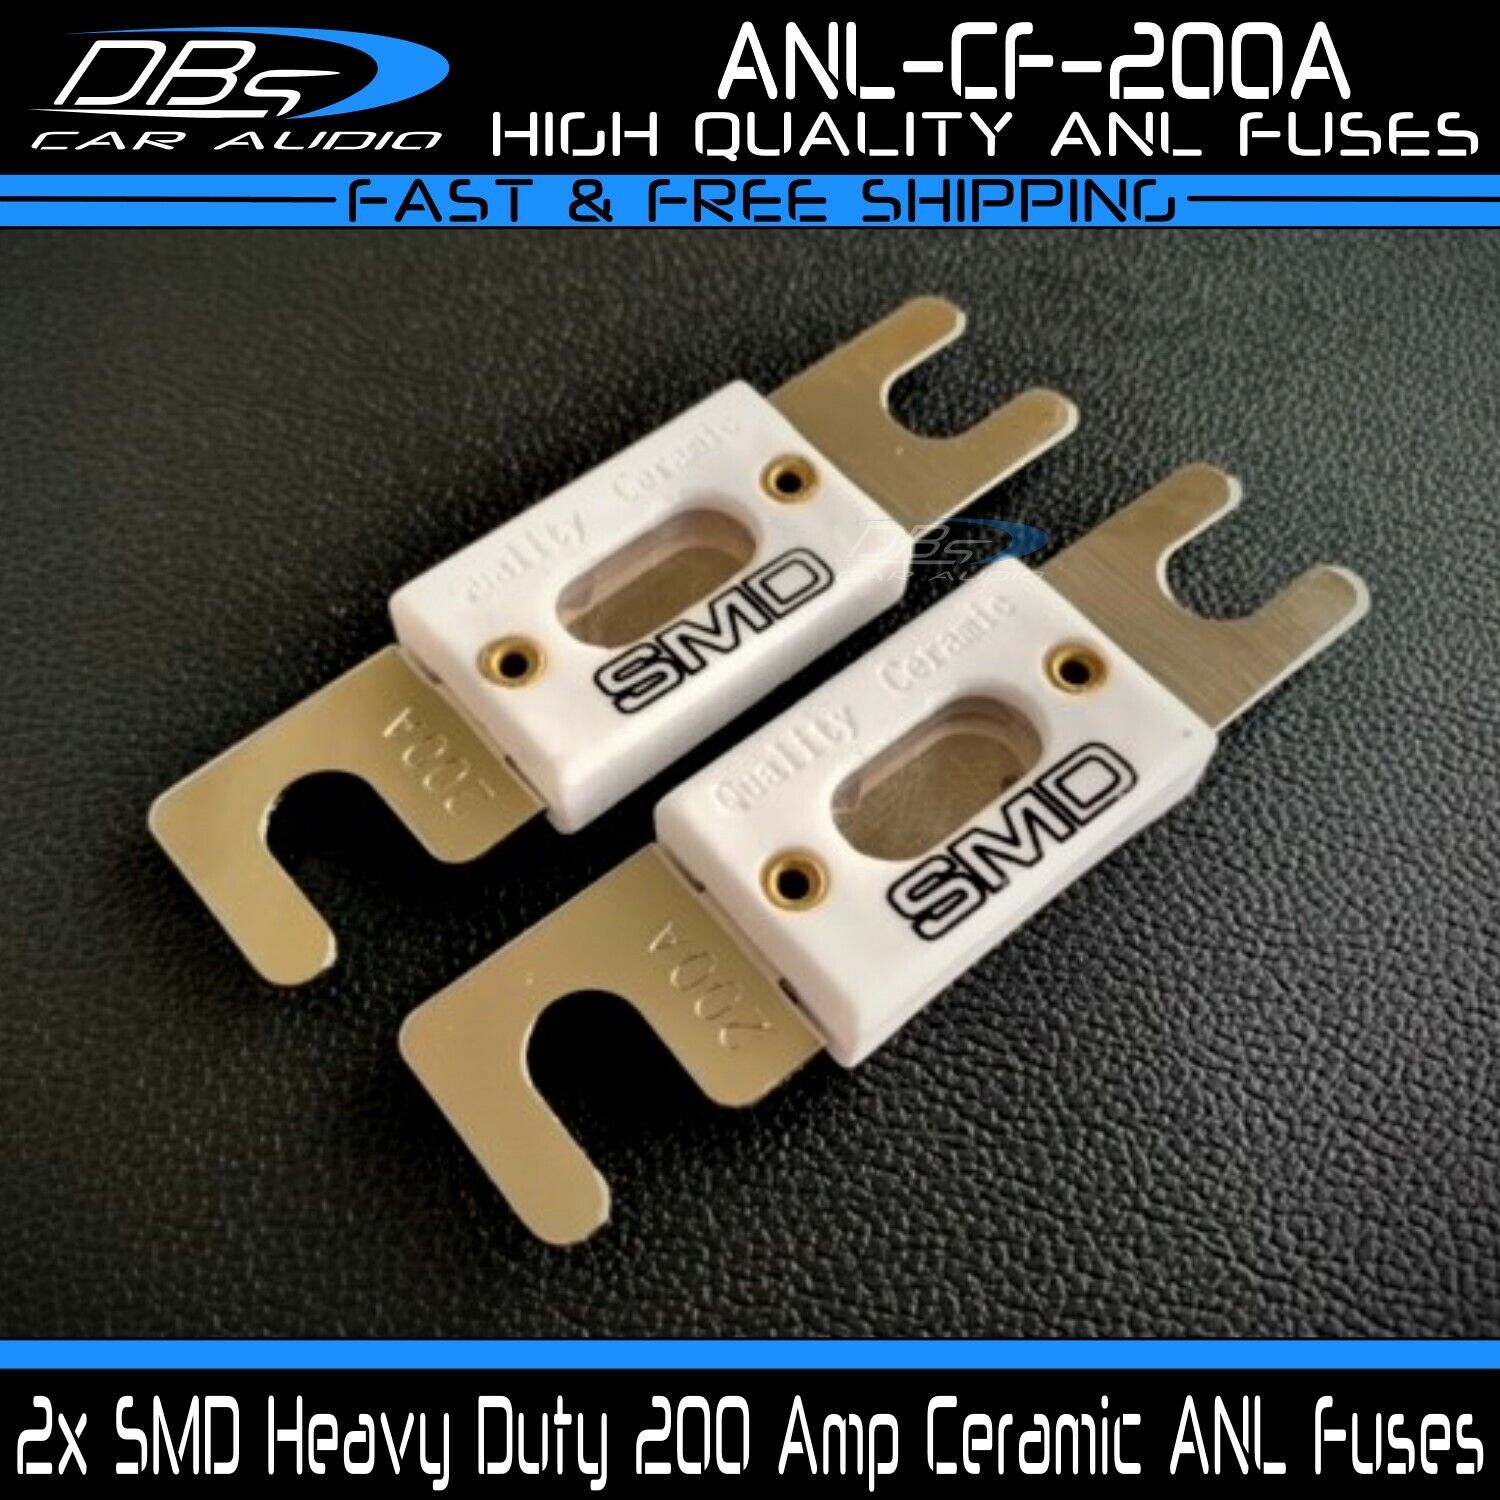 2x Steve Meade SMD 200 Amp Ceramic ANL Fuse 200A Heavy Duty High Quality Fuses SMD ANL-CF200A ANL CF-200A